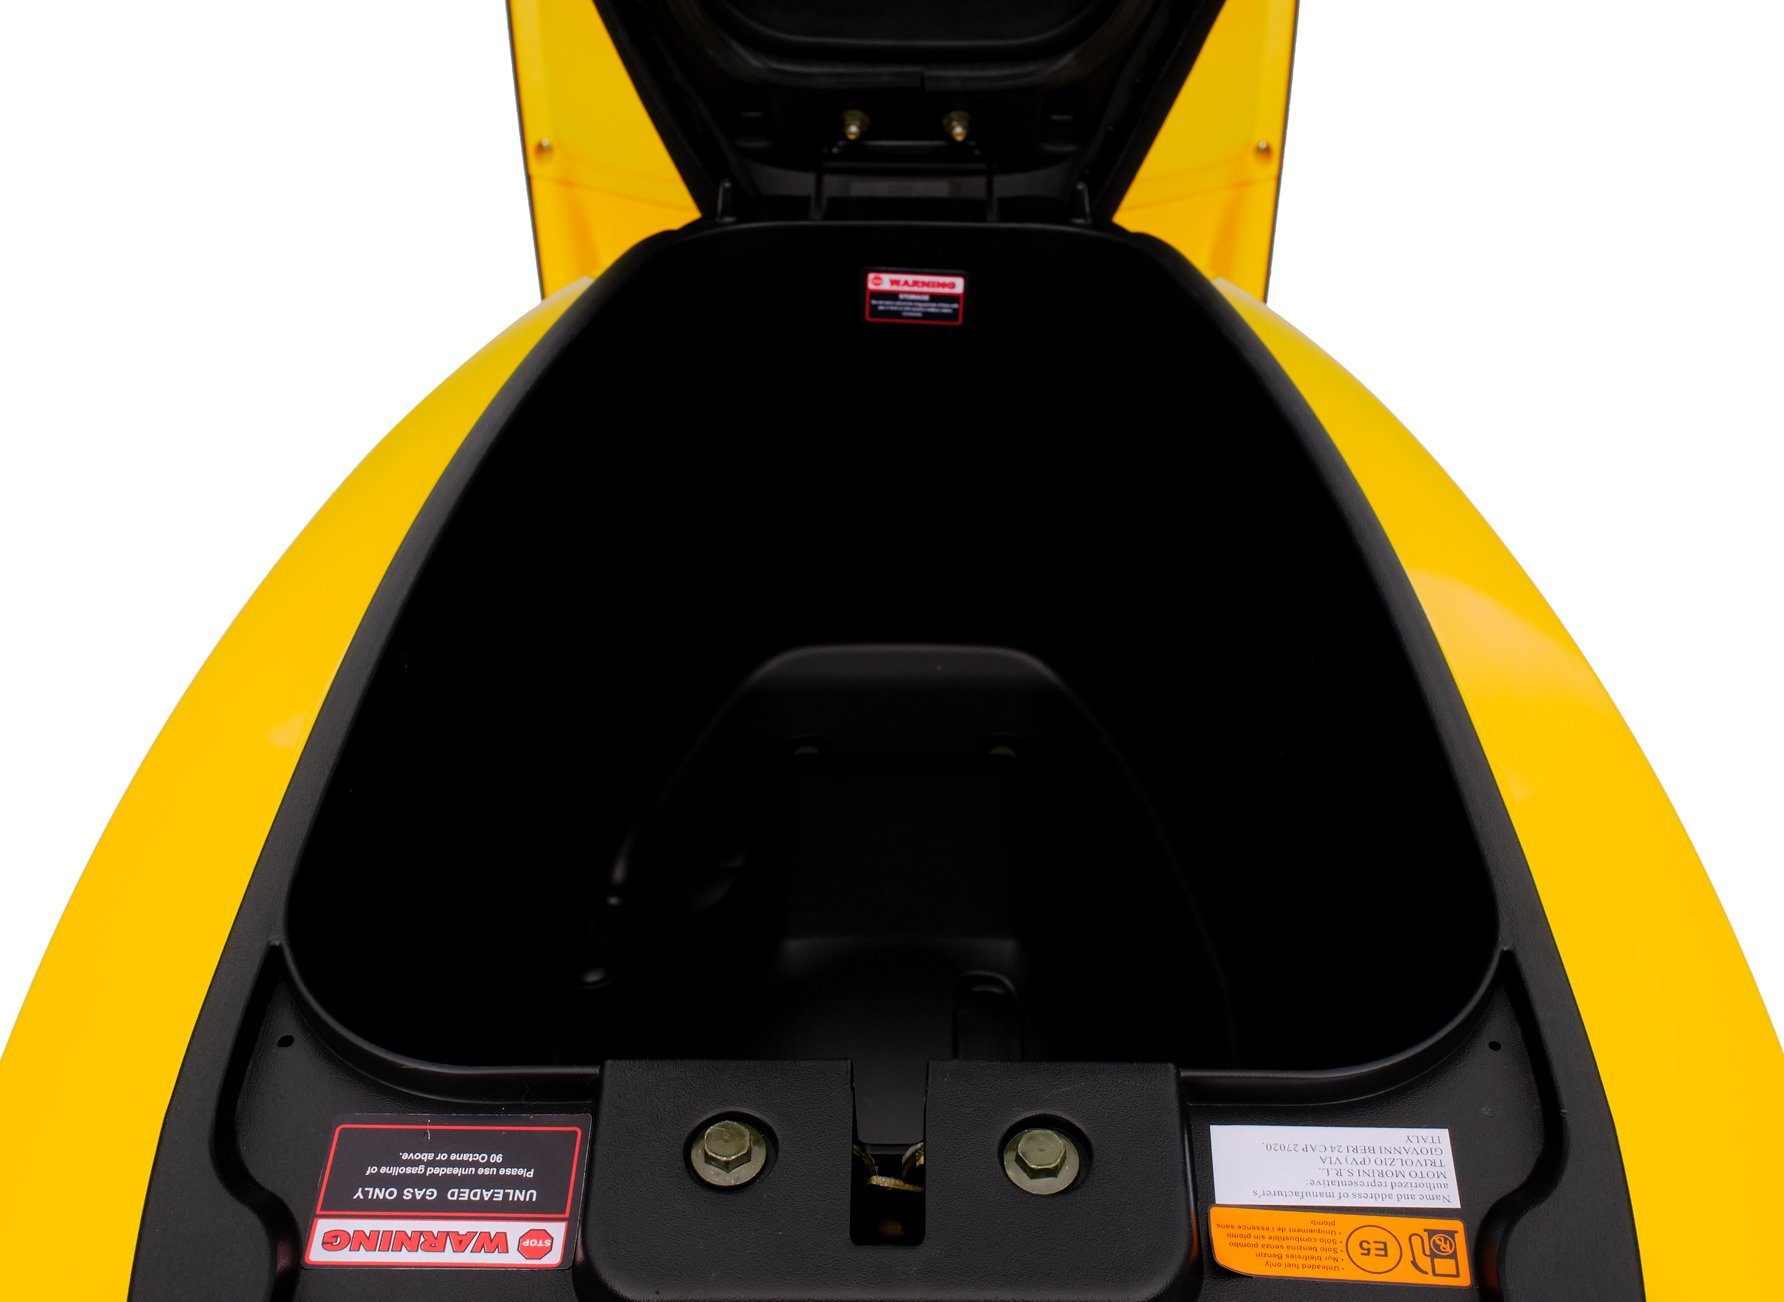 Burnout Motorroller 1453 GT125 125ccm USB -Anschluß 80 Topcase + inkl. 4, 125 Tageszulassung Windschild Euro + 4 km/h, Euro 85km/h, Gelb ccm